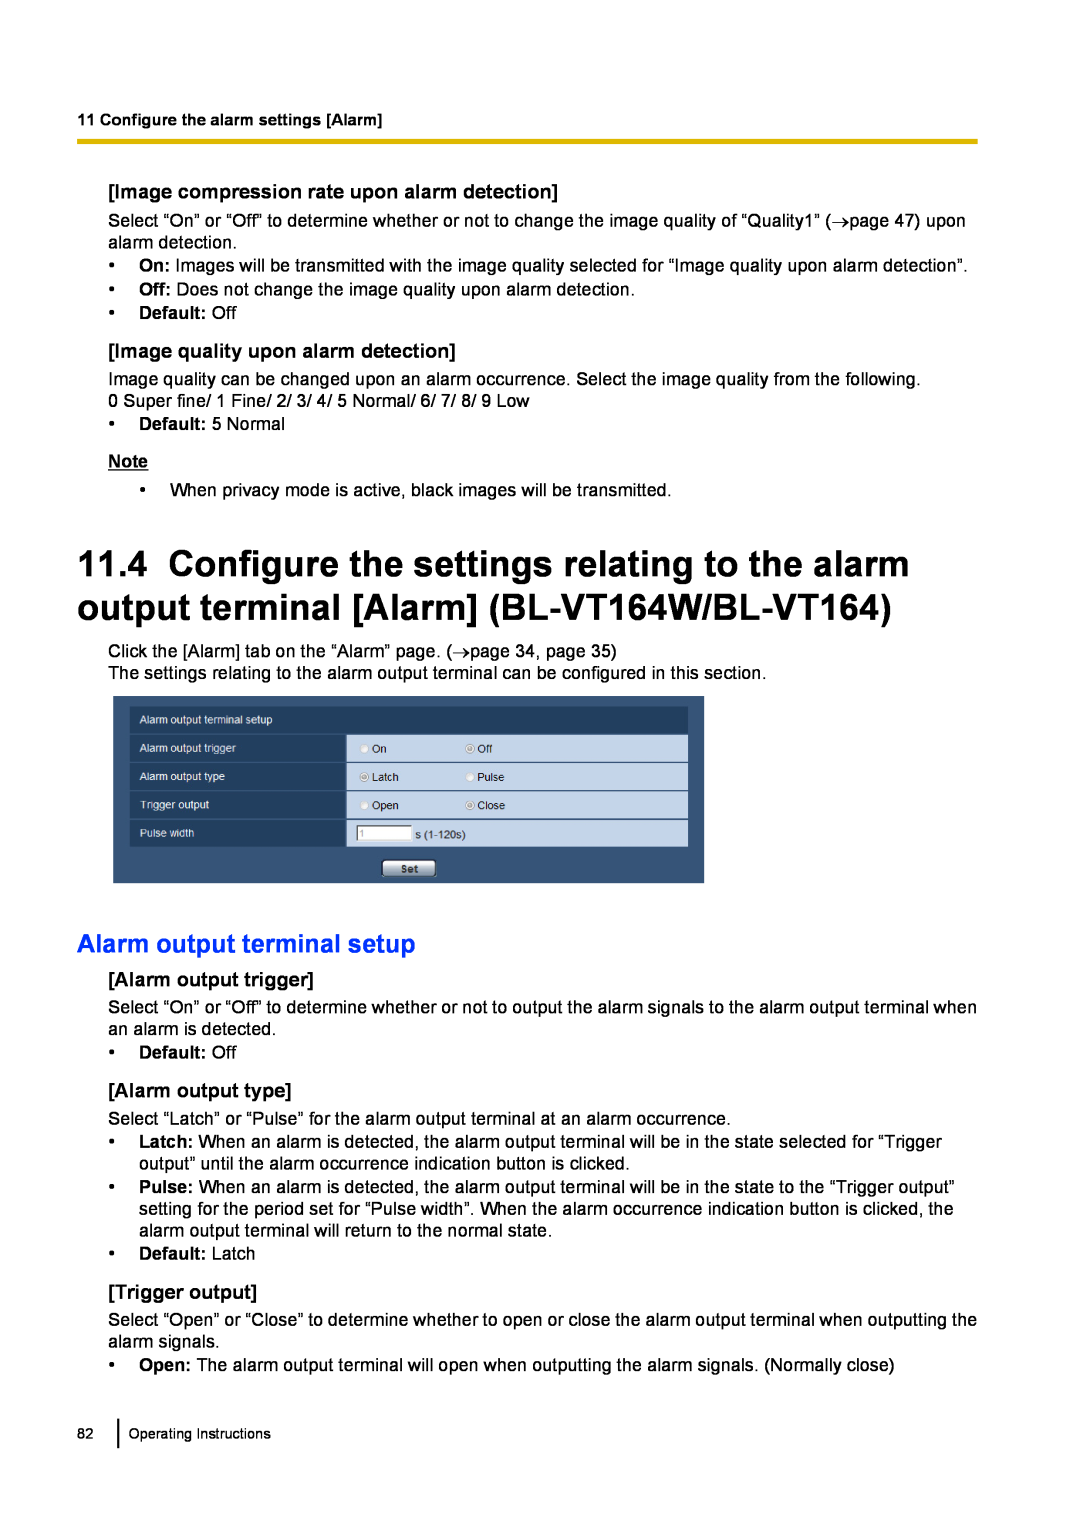 Panasonic BL-VP104W manual Alarm output terminal setup, Image compression rate upon alarm detection, Alarm output trigger 